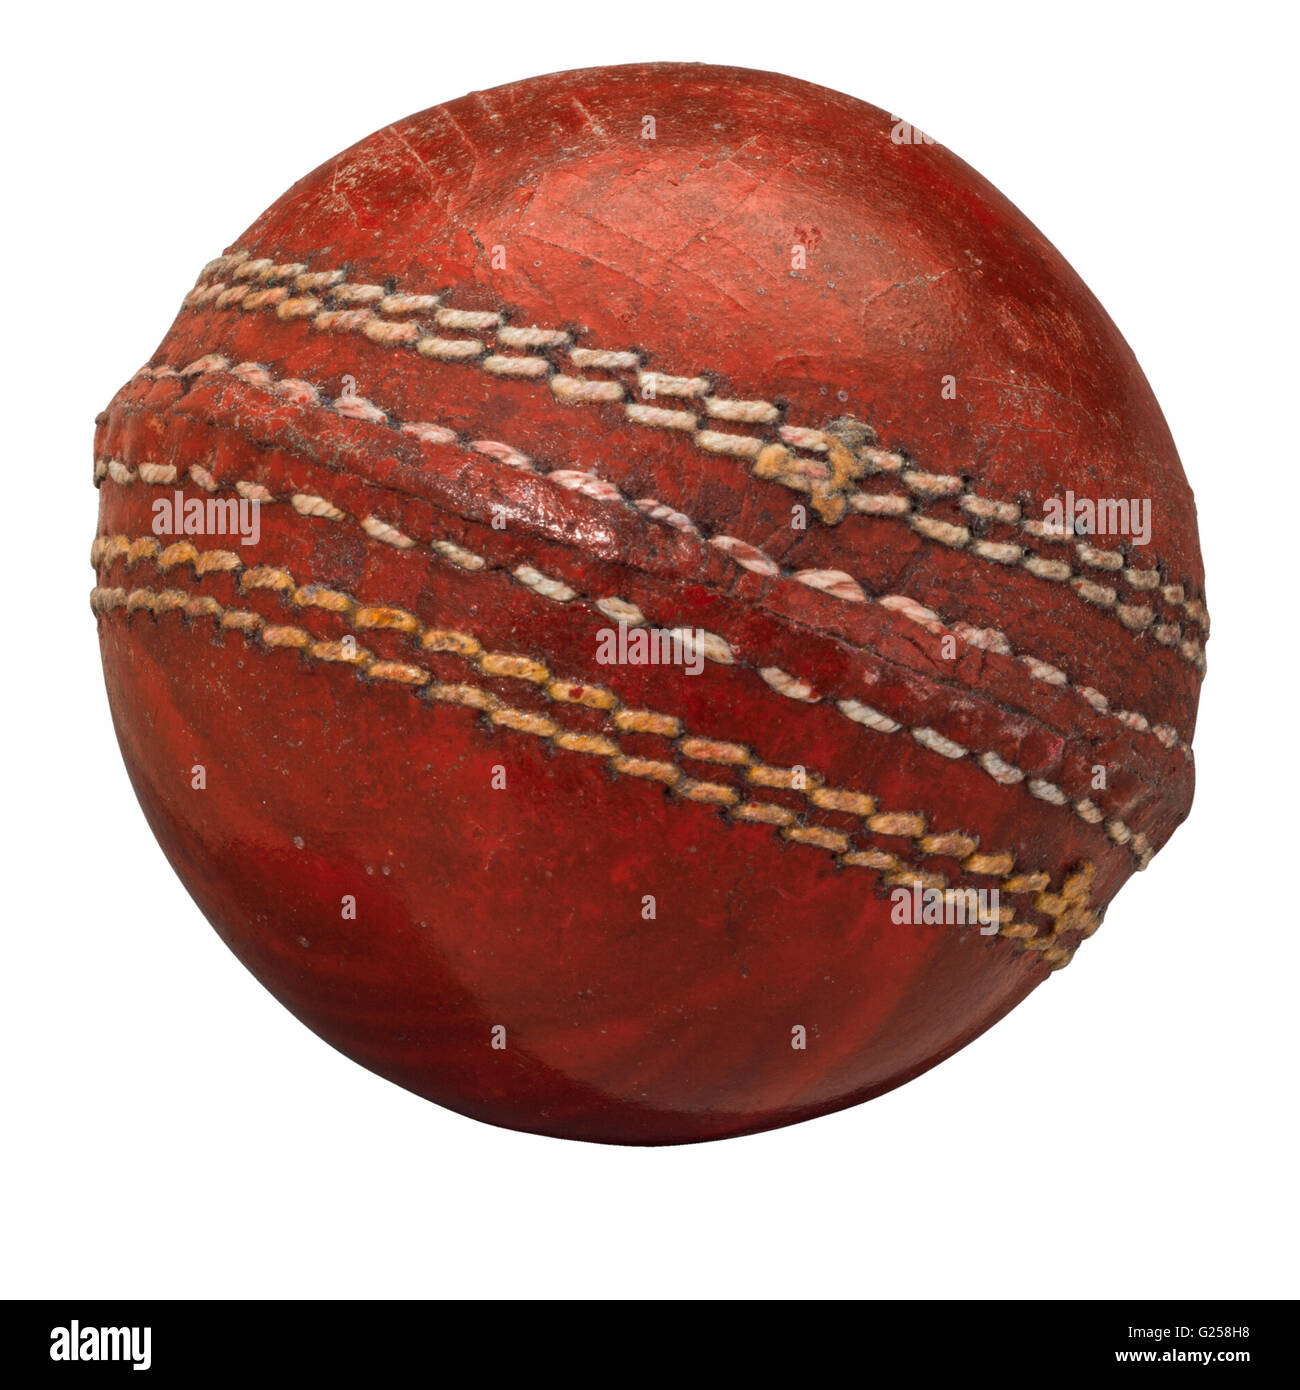 cricket ball isolated on background Stock Photo